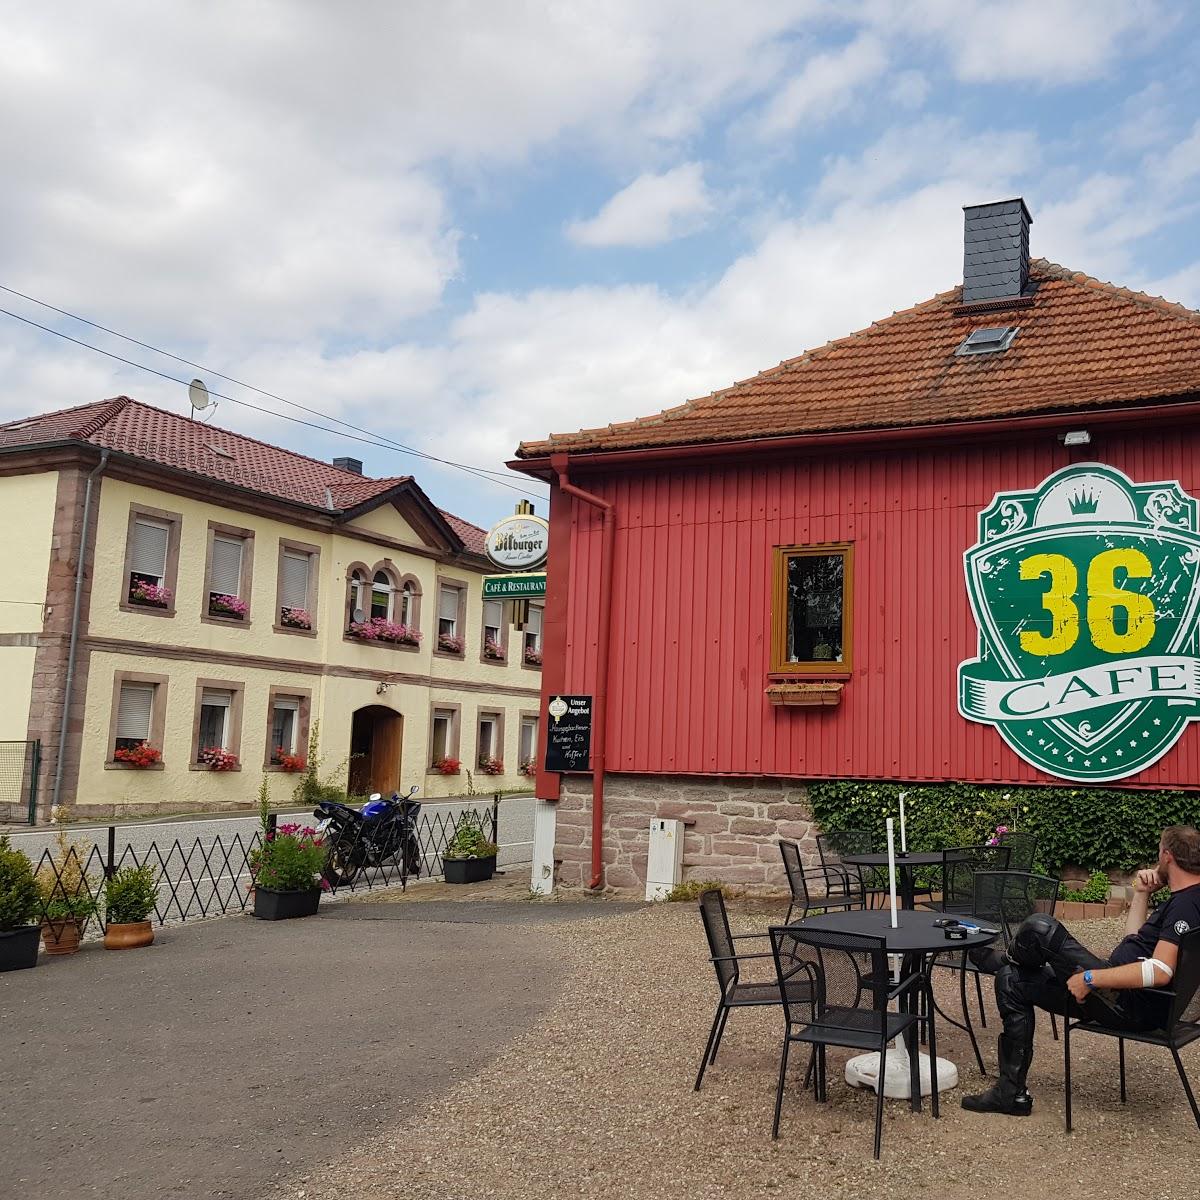 Restaurant "Biker Oase Cafe 36" in Kelbra (Kyffhäuser)